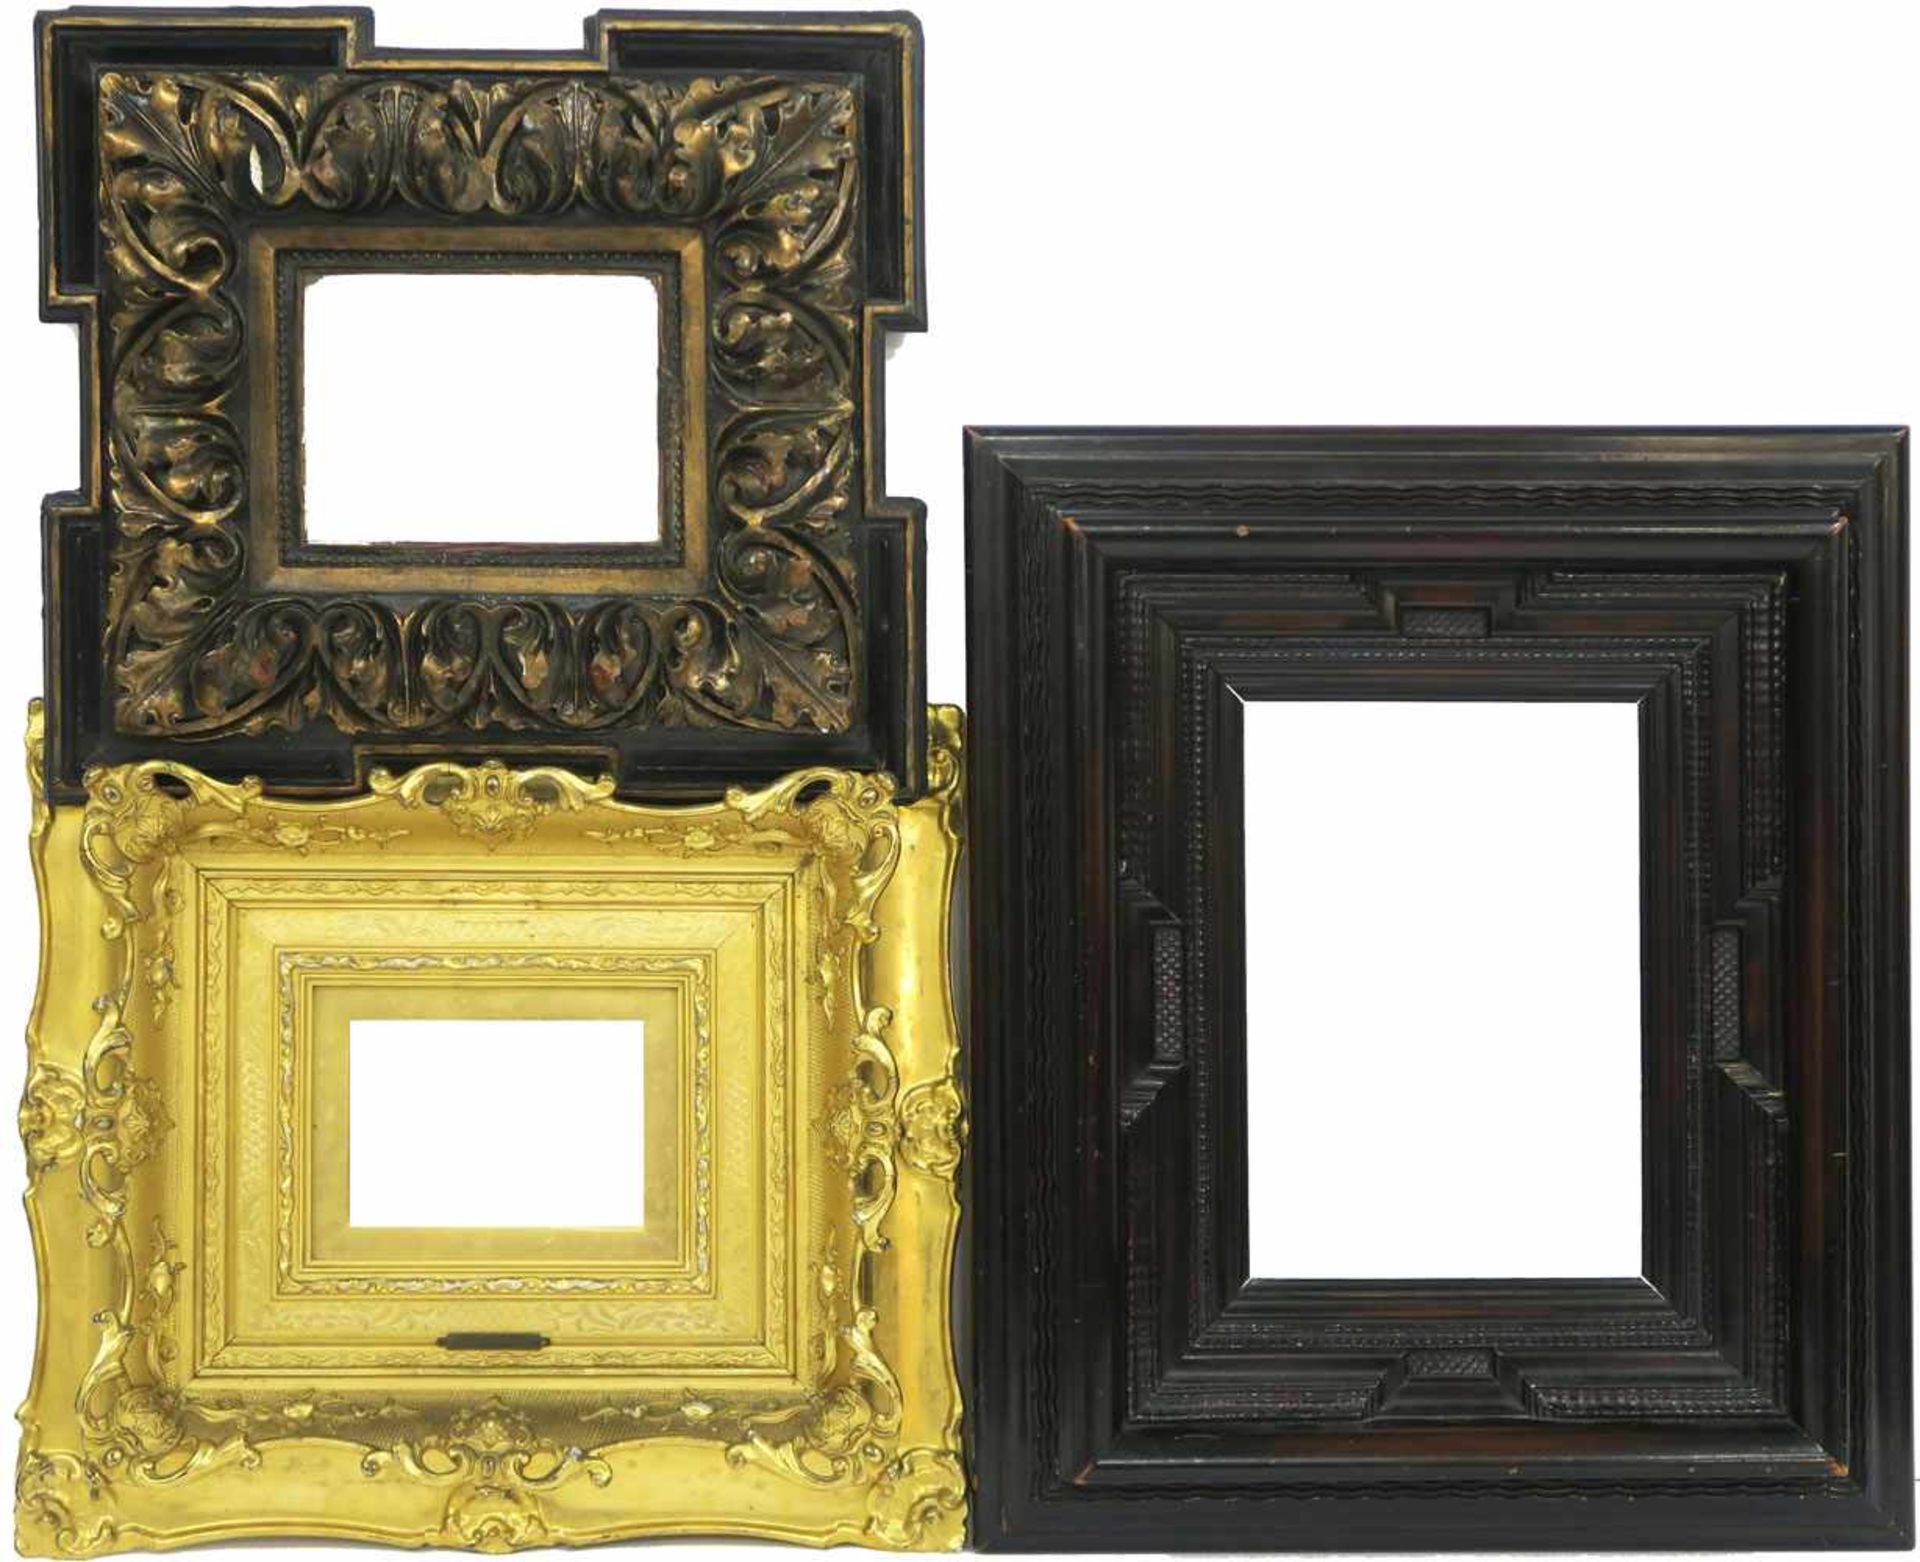 Drei RahmenHolz, tlw. Stuck, dunkel bzw. goldfarben gefasst. Tlw. Akanthus- bzw. Rocaillen- und